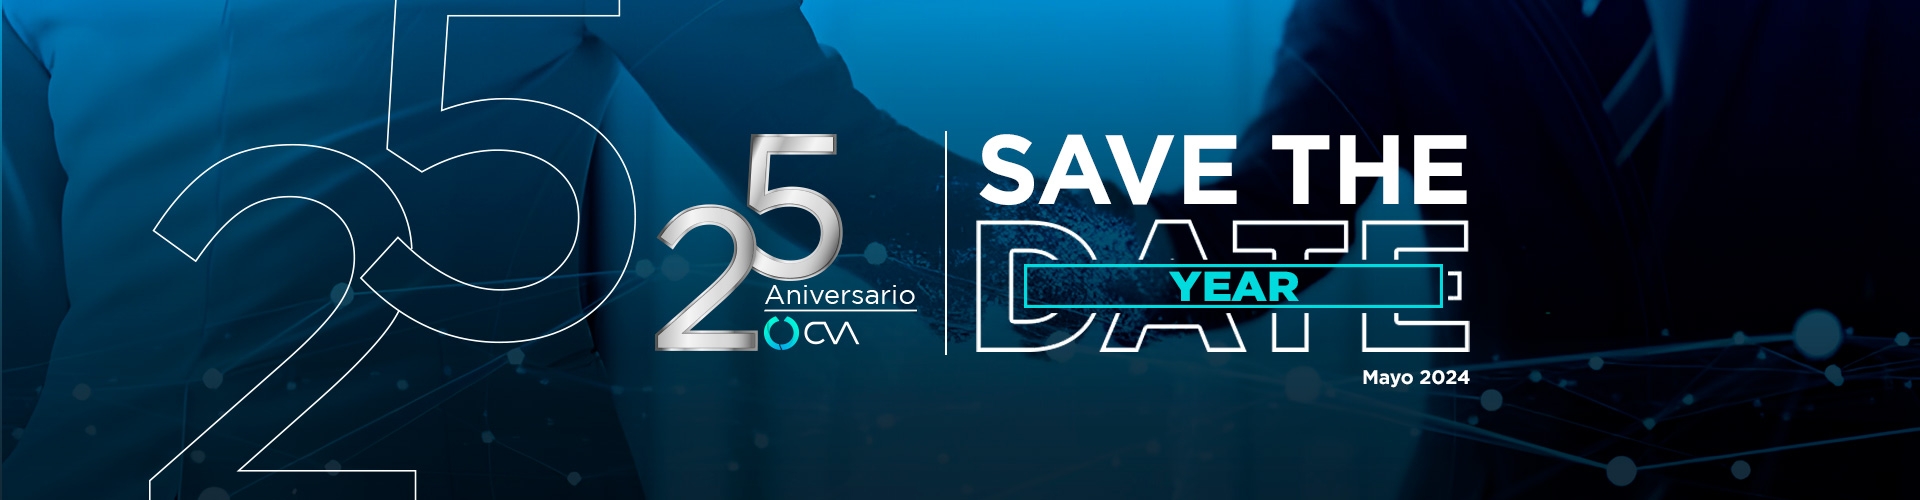 Save the year 25 aniversario CVA